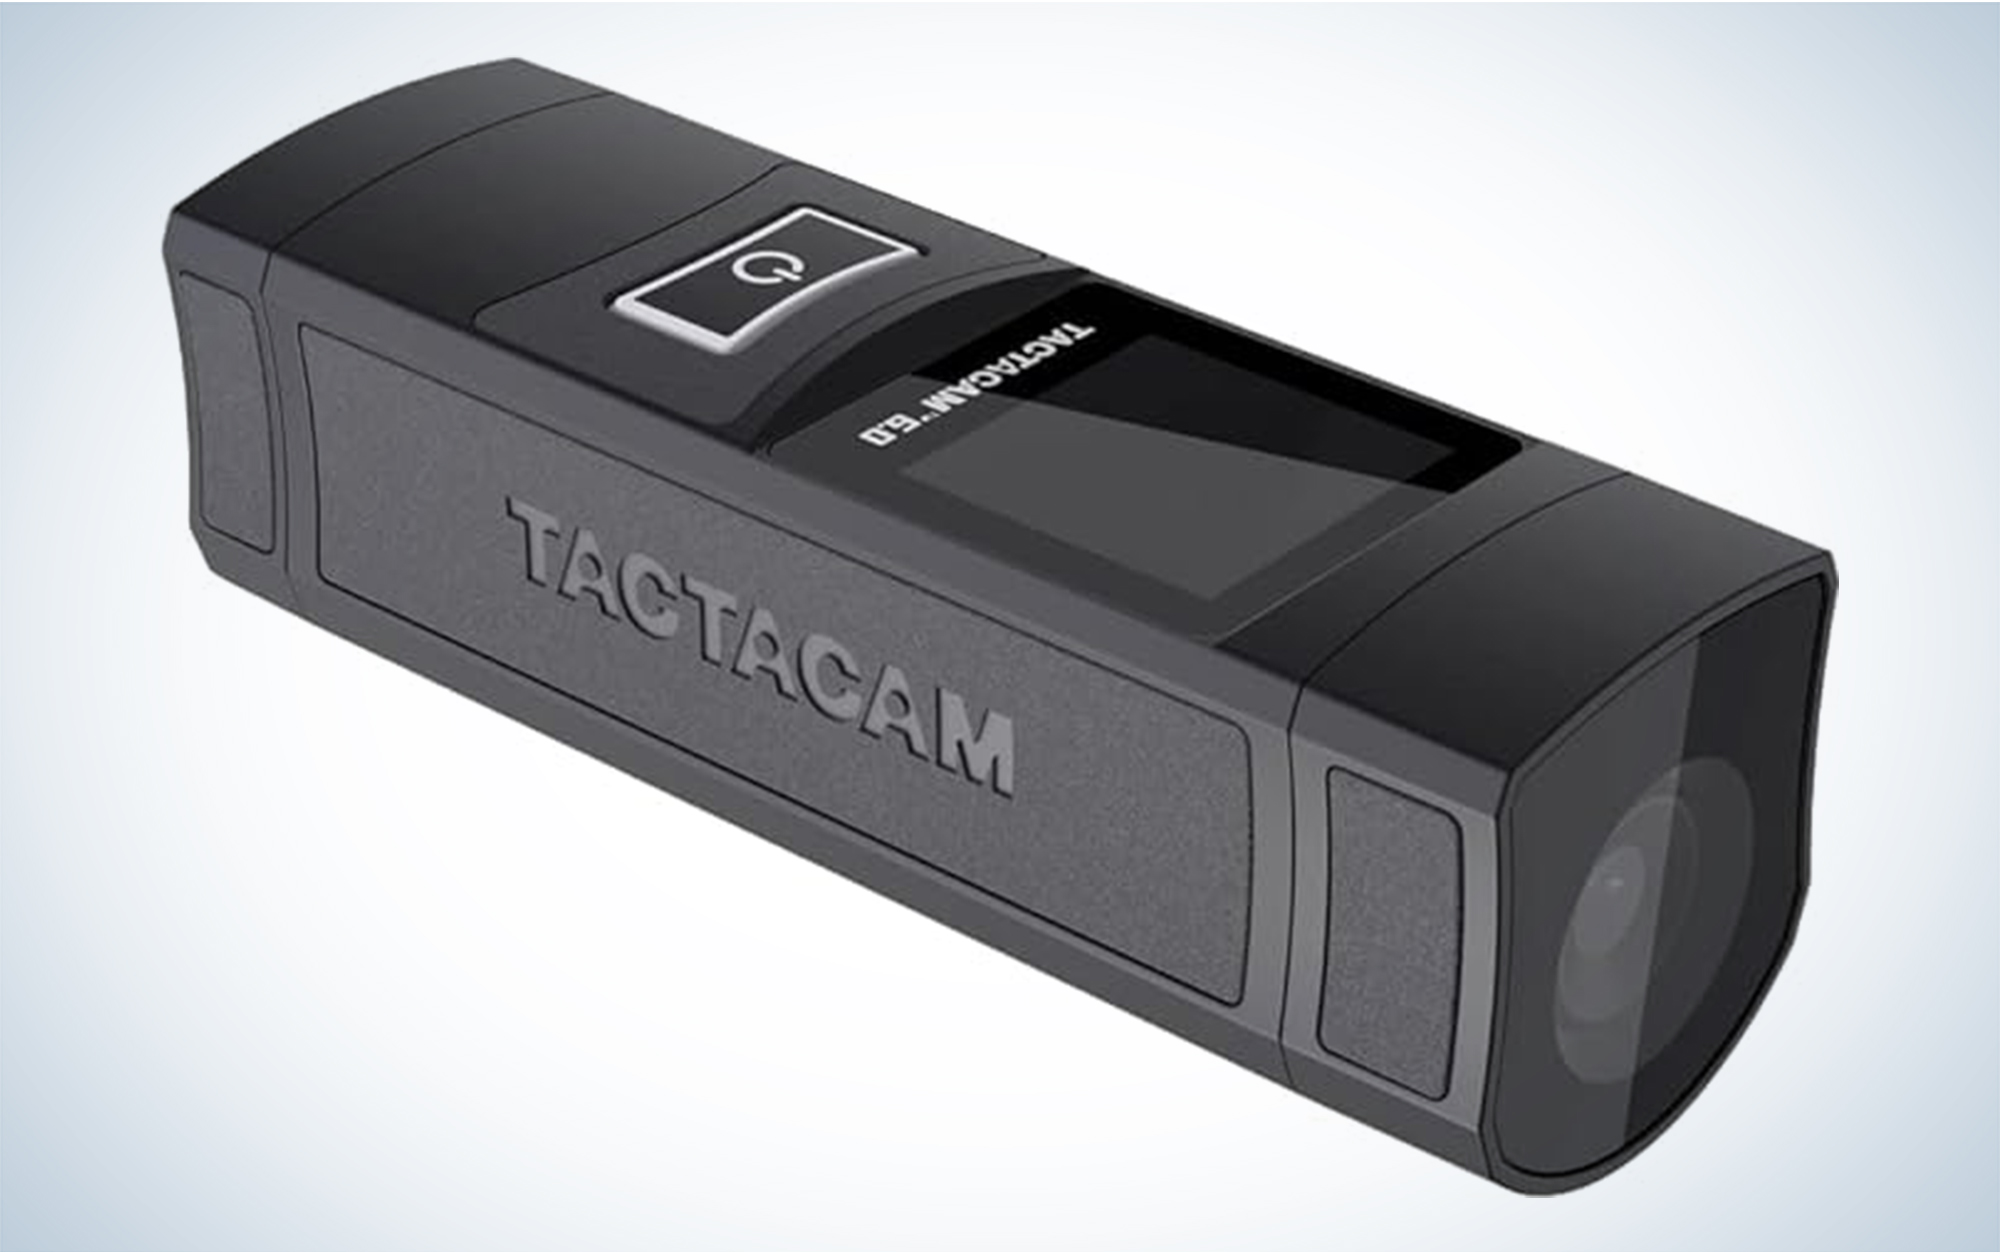 We reviewed the Tactacam 6.0.